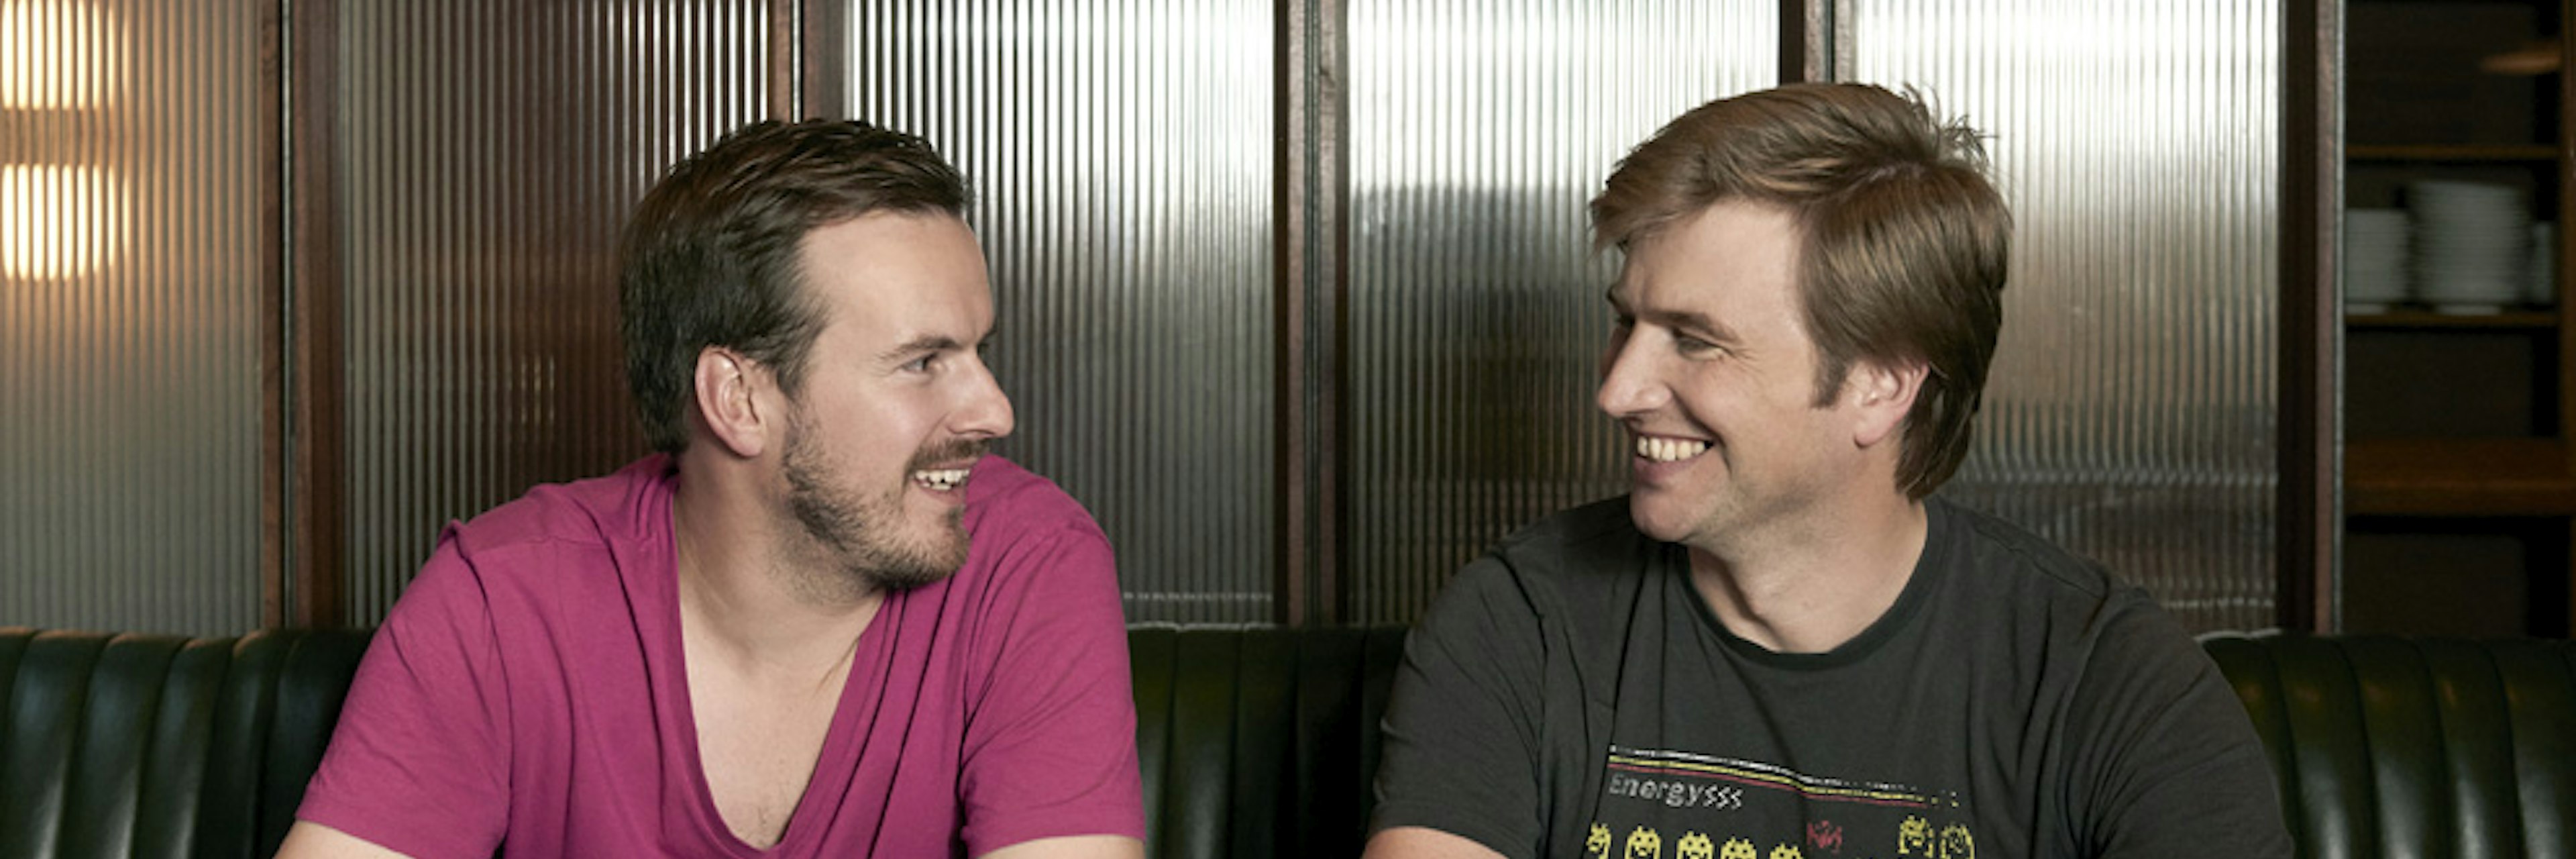 TransferWise founders Taavet Hinrikus and Kristo Kaarmann